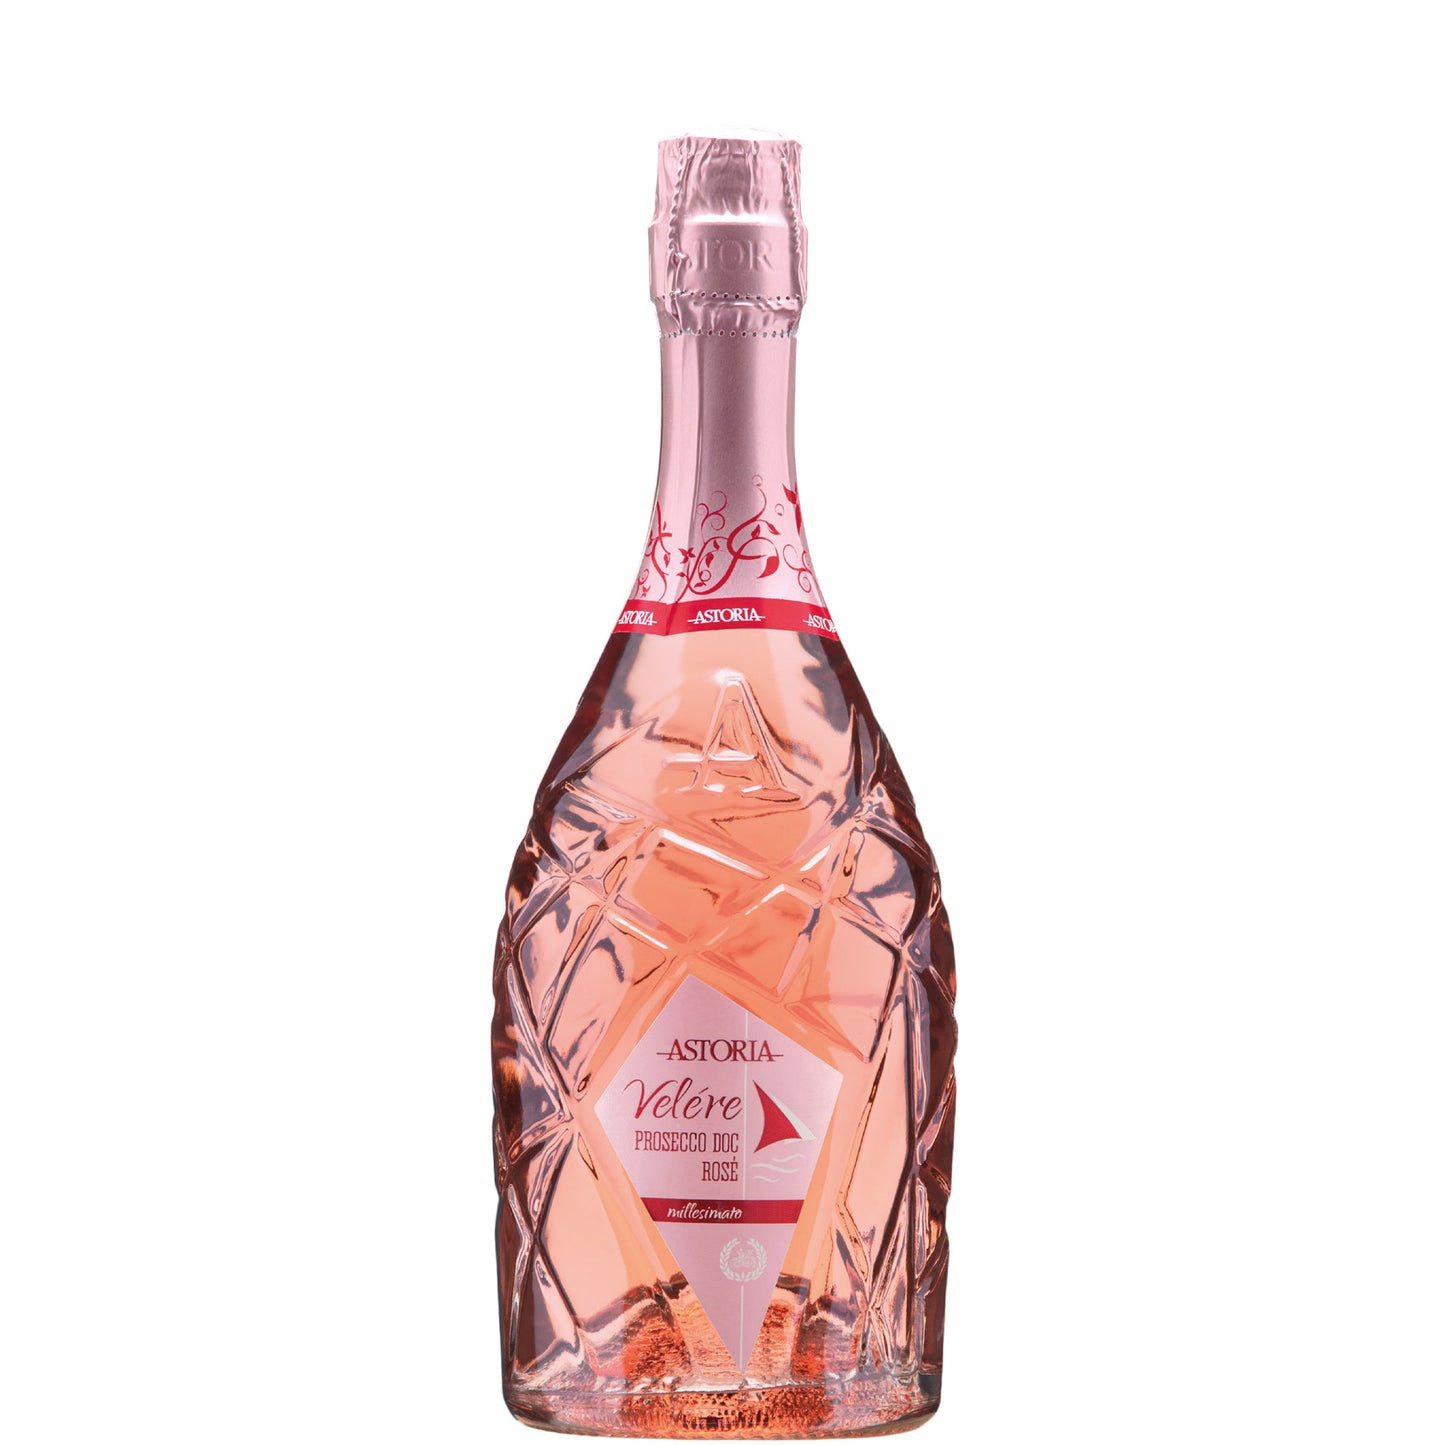 Astoria, Velere Prosecco Rosé Millesimato Extra Dry, Nv (12345)